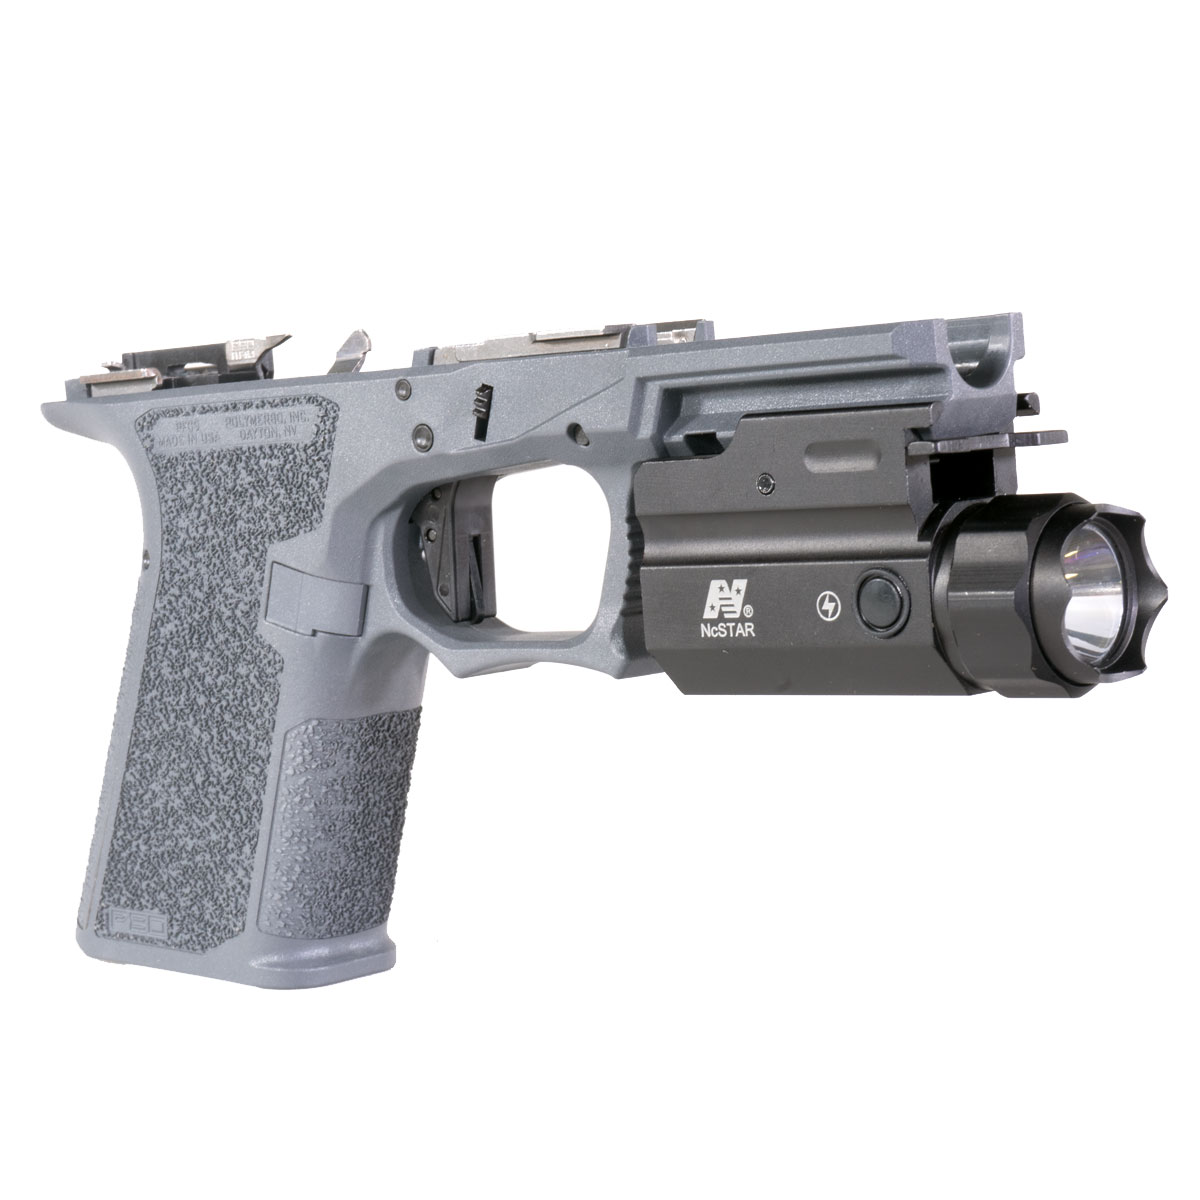 Frame Bundle: Polymer80 - PFC9 Serialized Compact Complete Pistol Frame + NcSTAR Quick-Release Pistol Flashlight